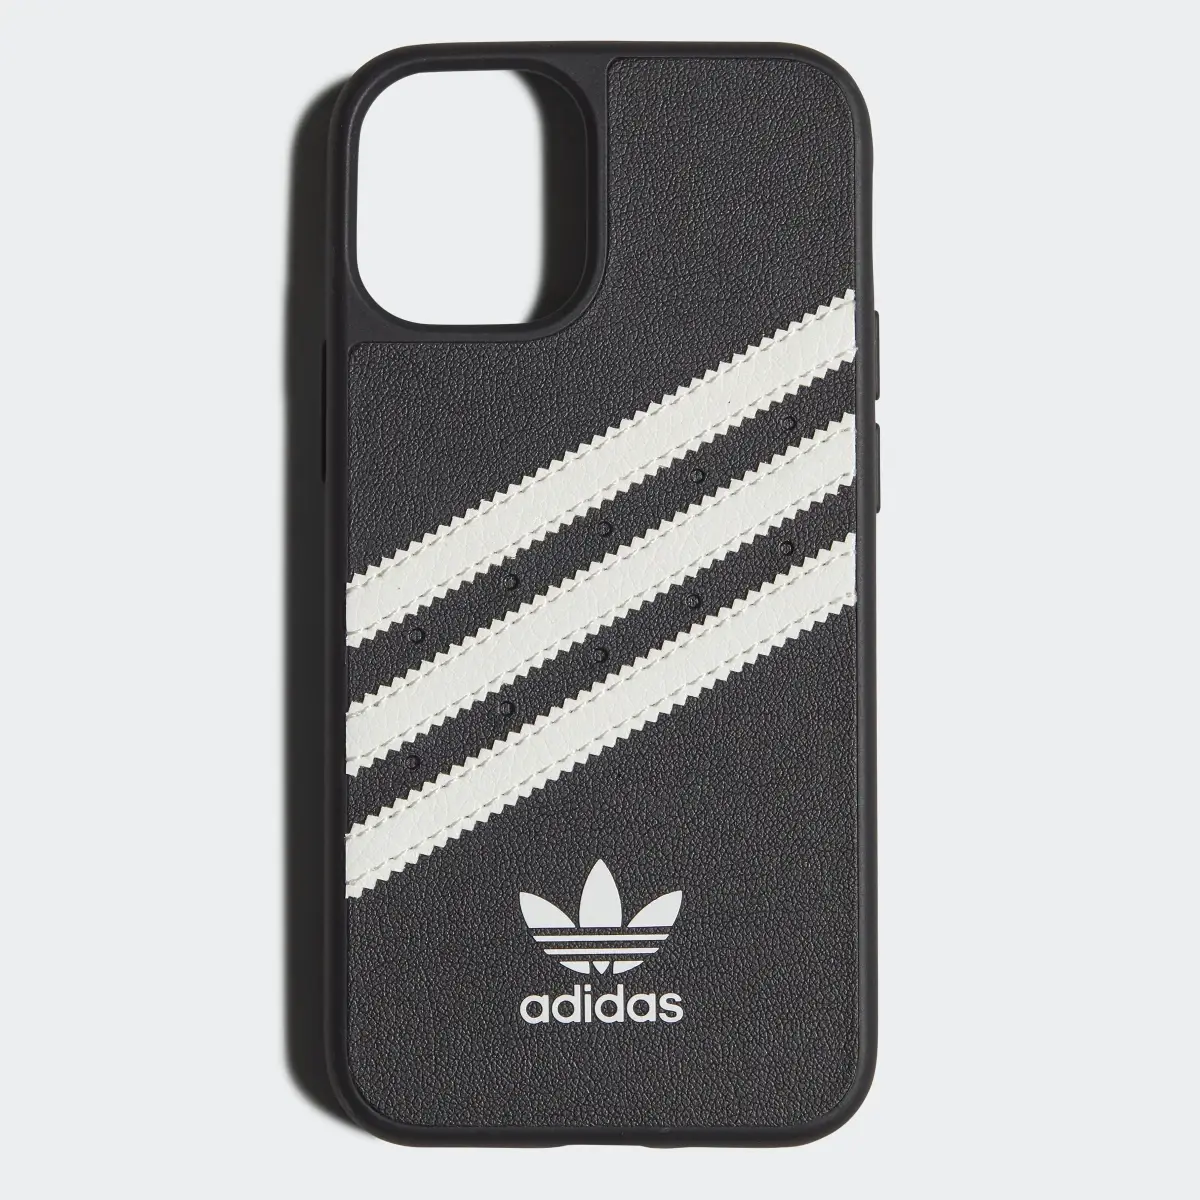 Adidas Molded Samba for iPhone 12 mini. 1